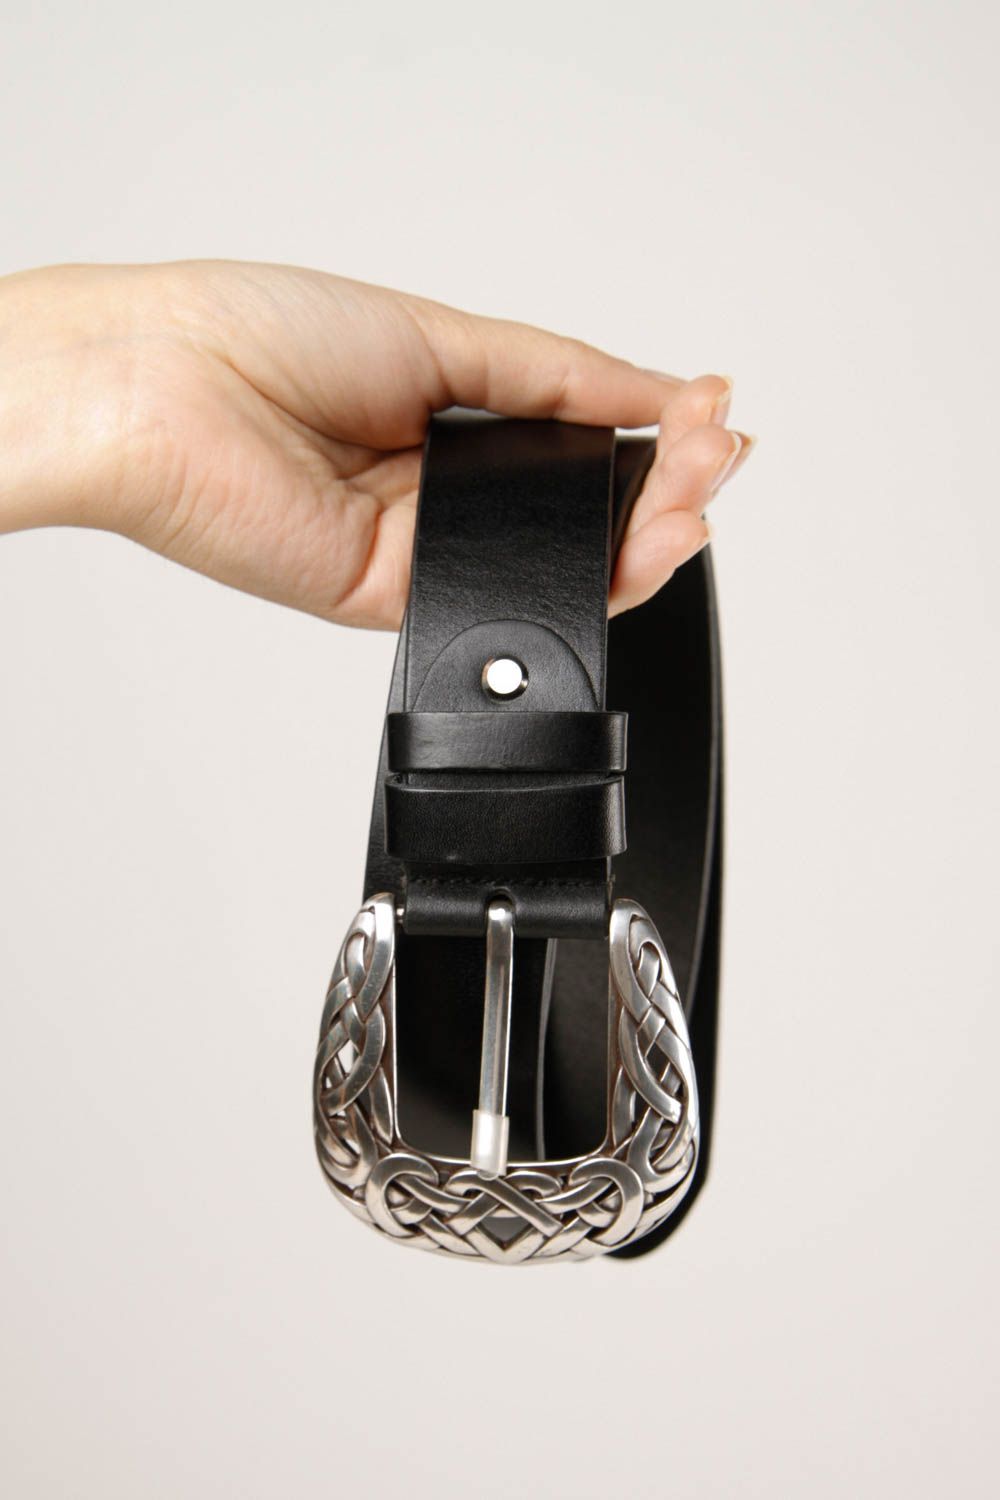 Cinturón de cuero natural hecho a mano ropa masculina accesorio de moda foto 2